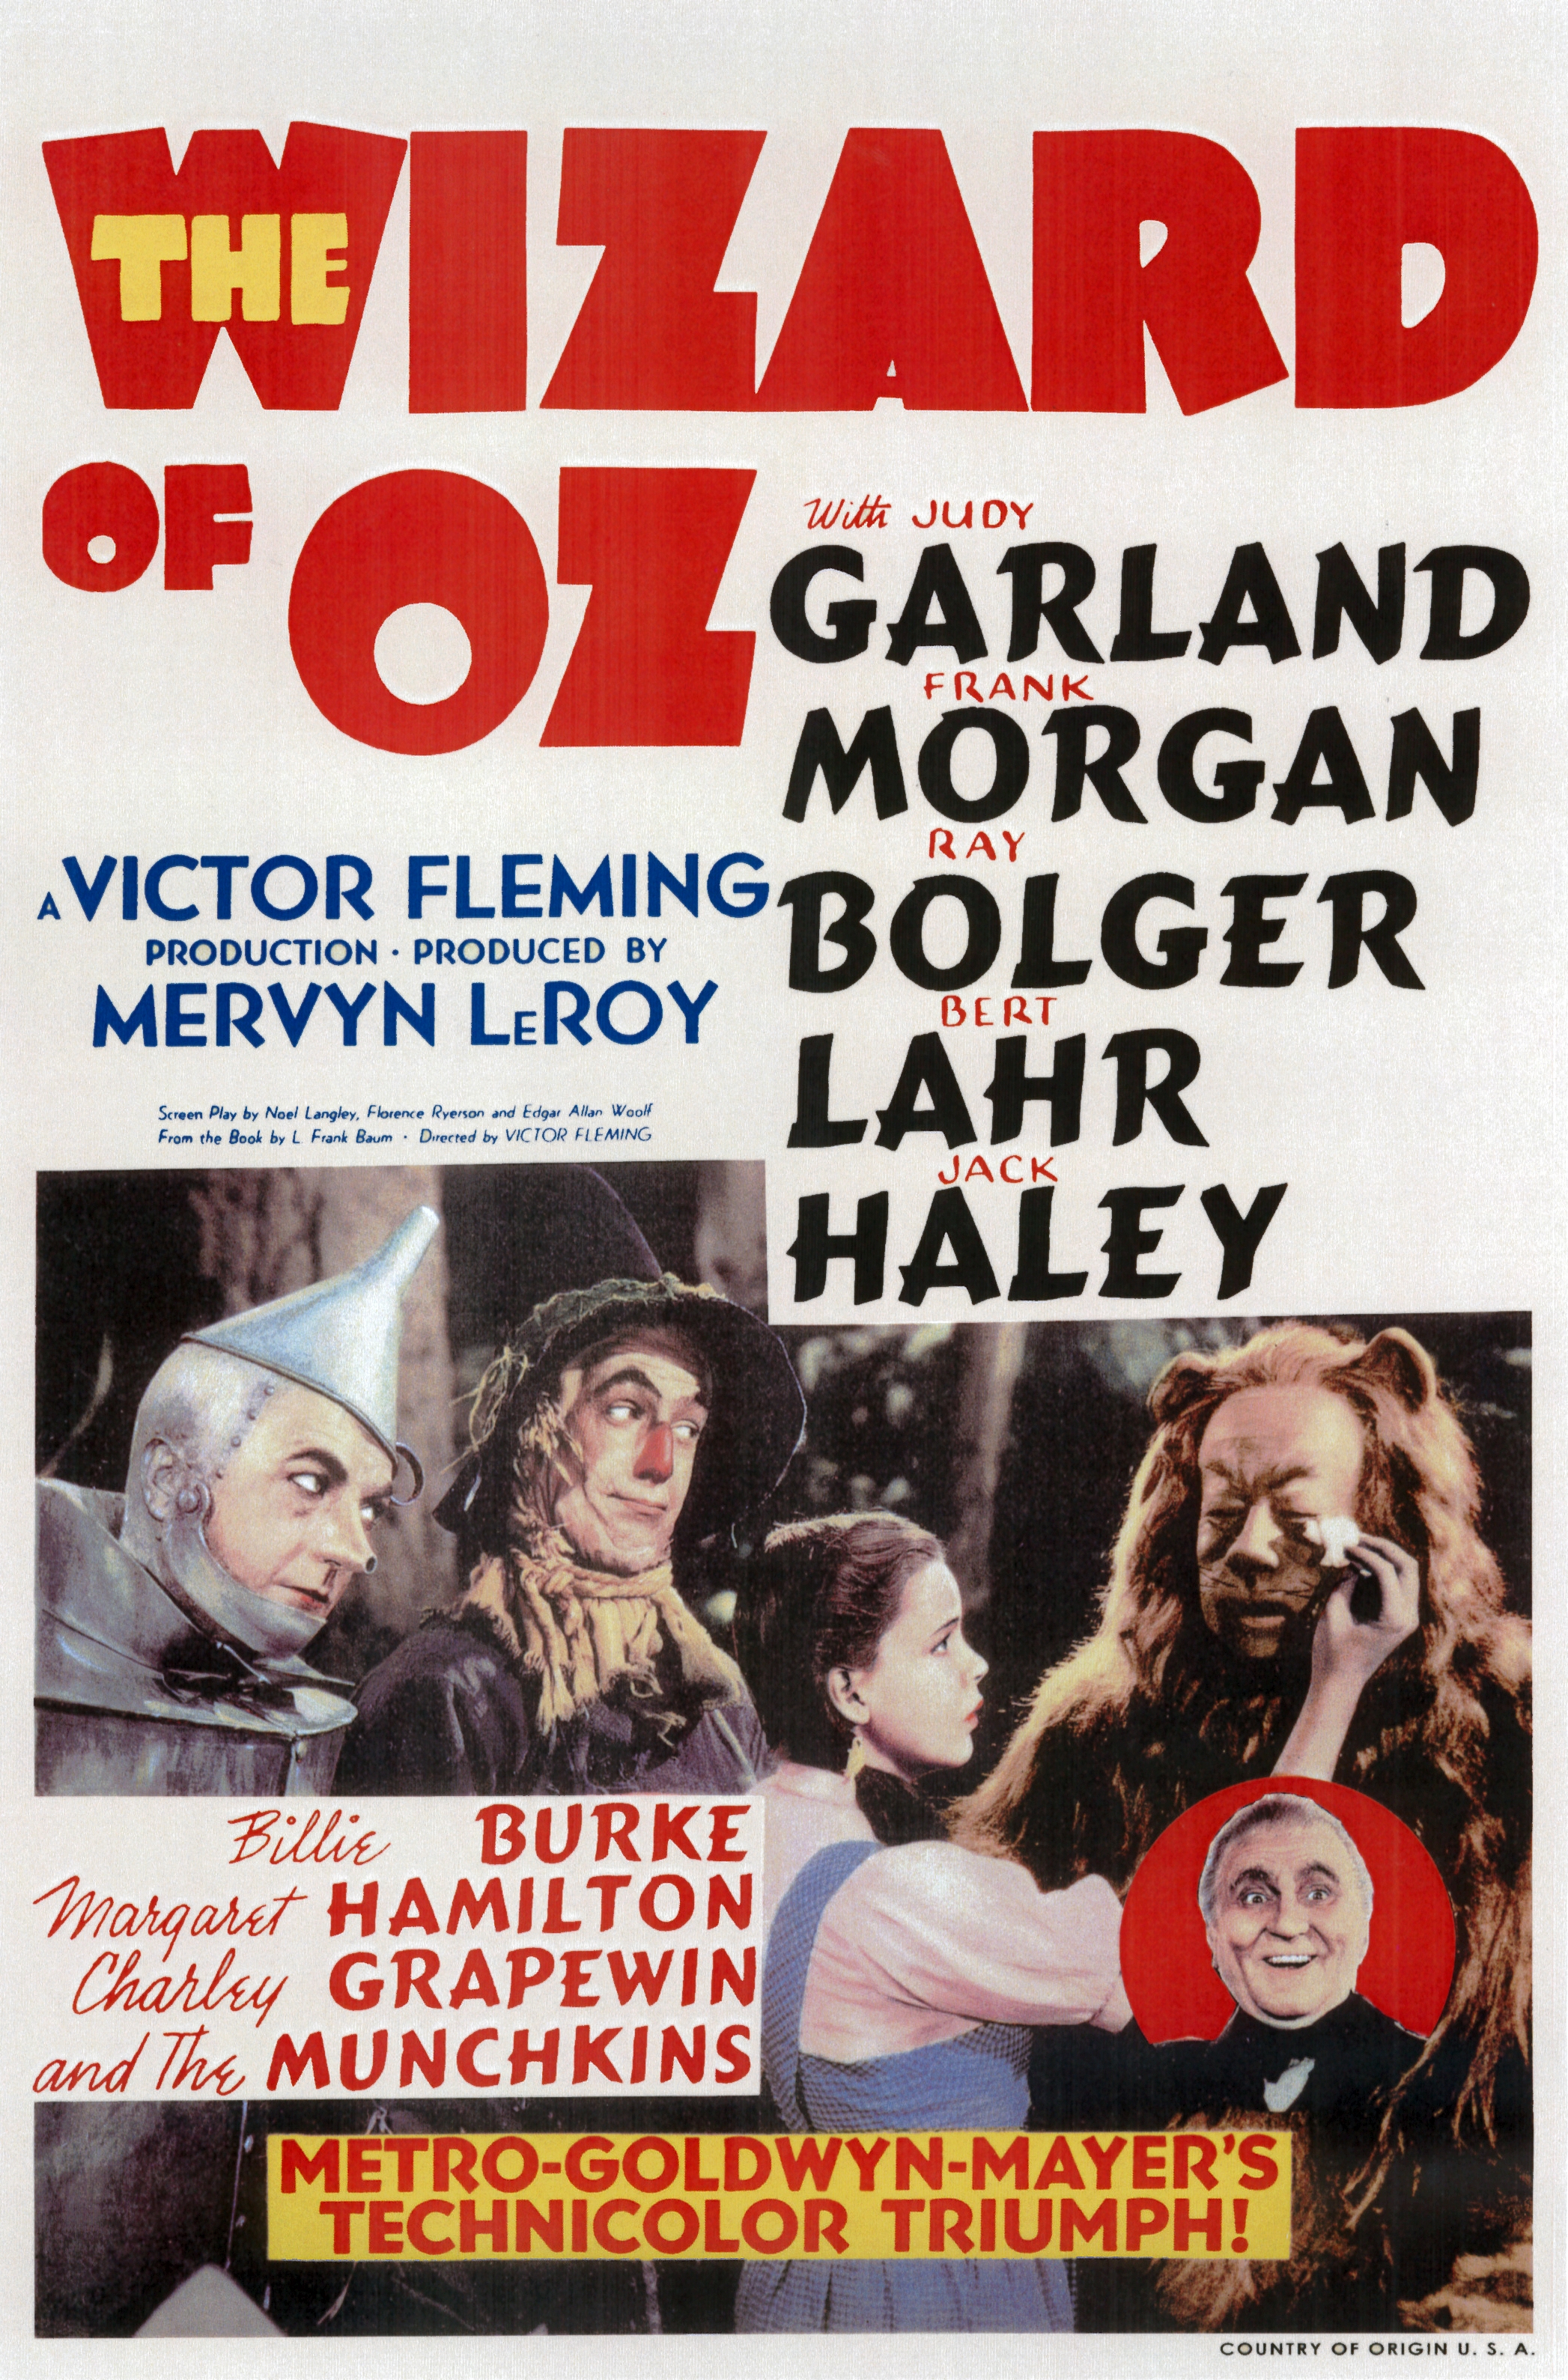 The Wizard of Oz. Warner Bros. Entertainment